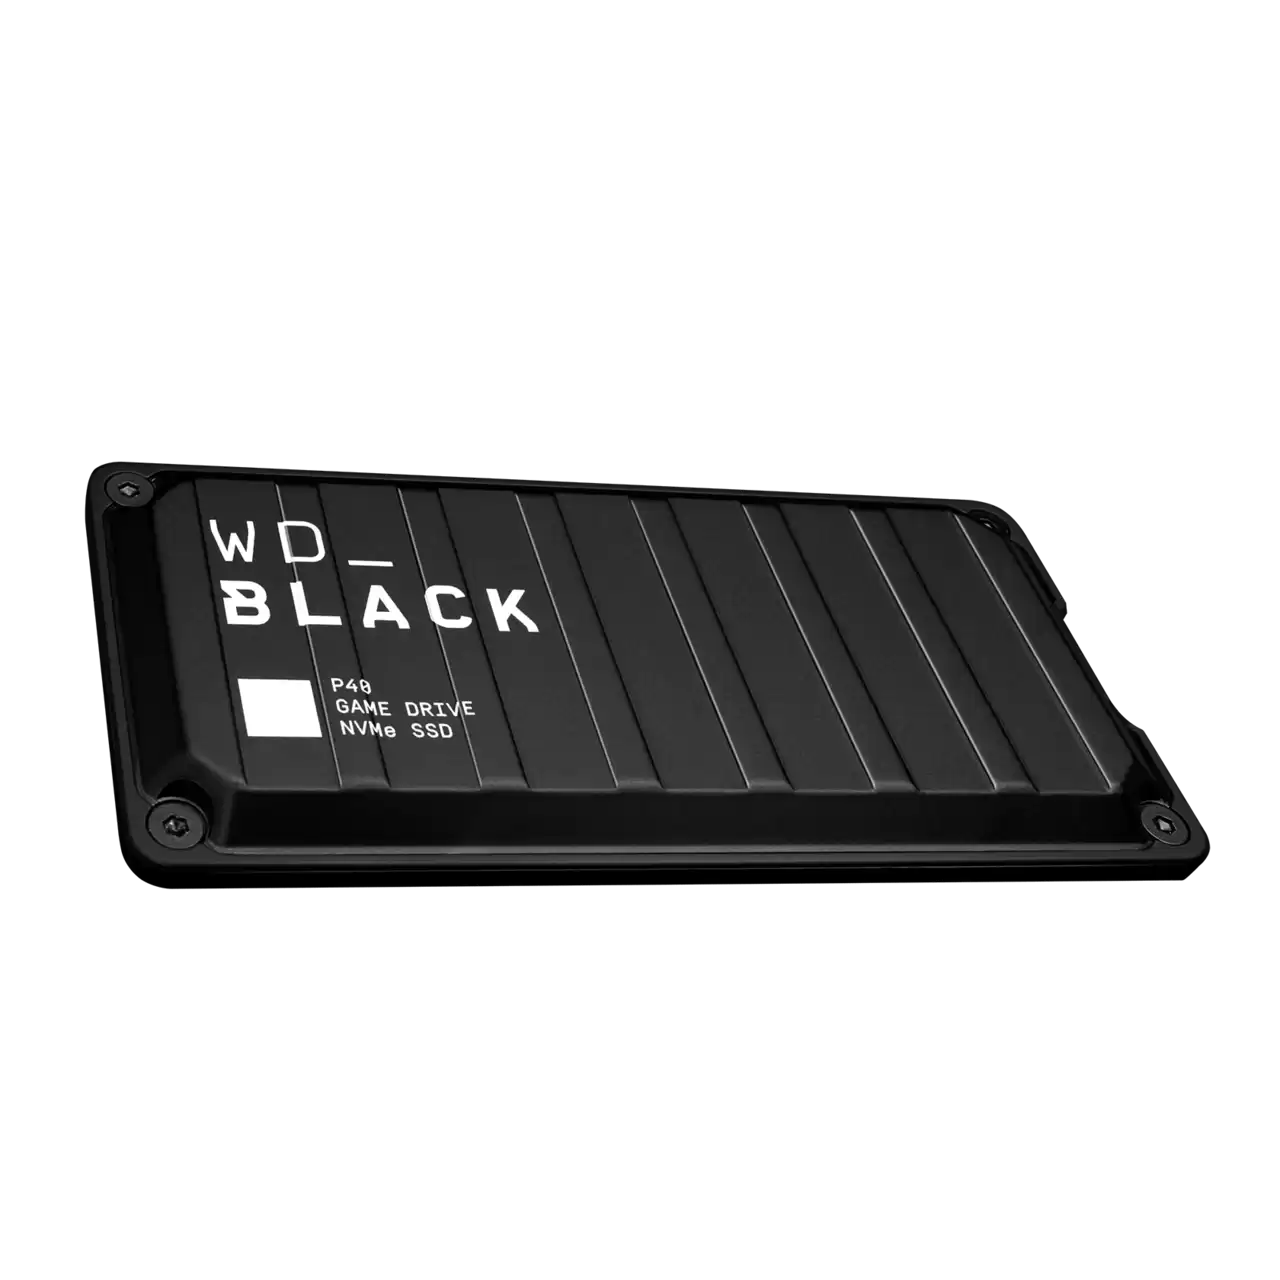 Hard disk ssd western digital wd black p40 game drive 500gb